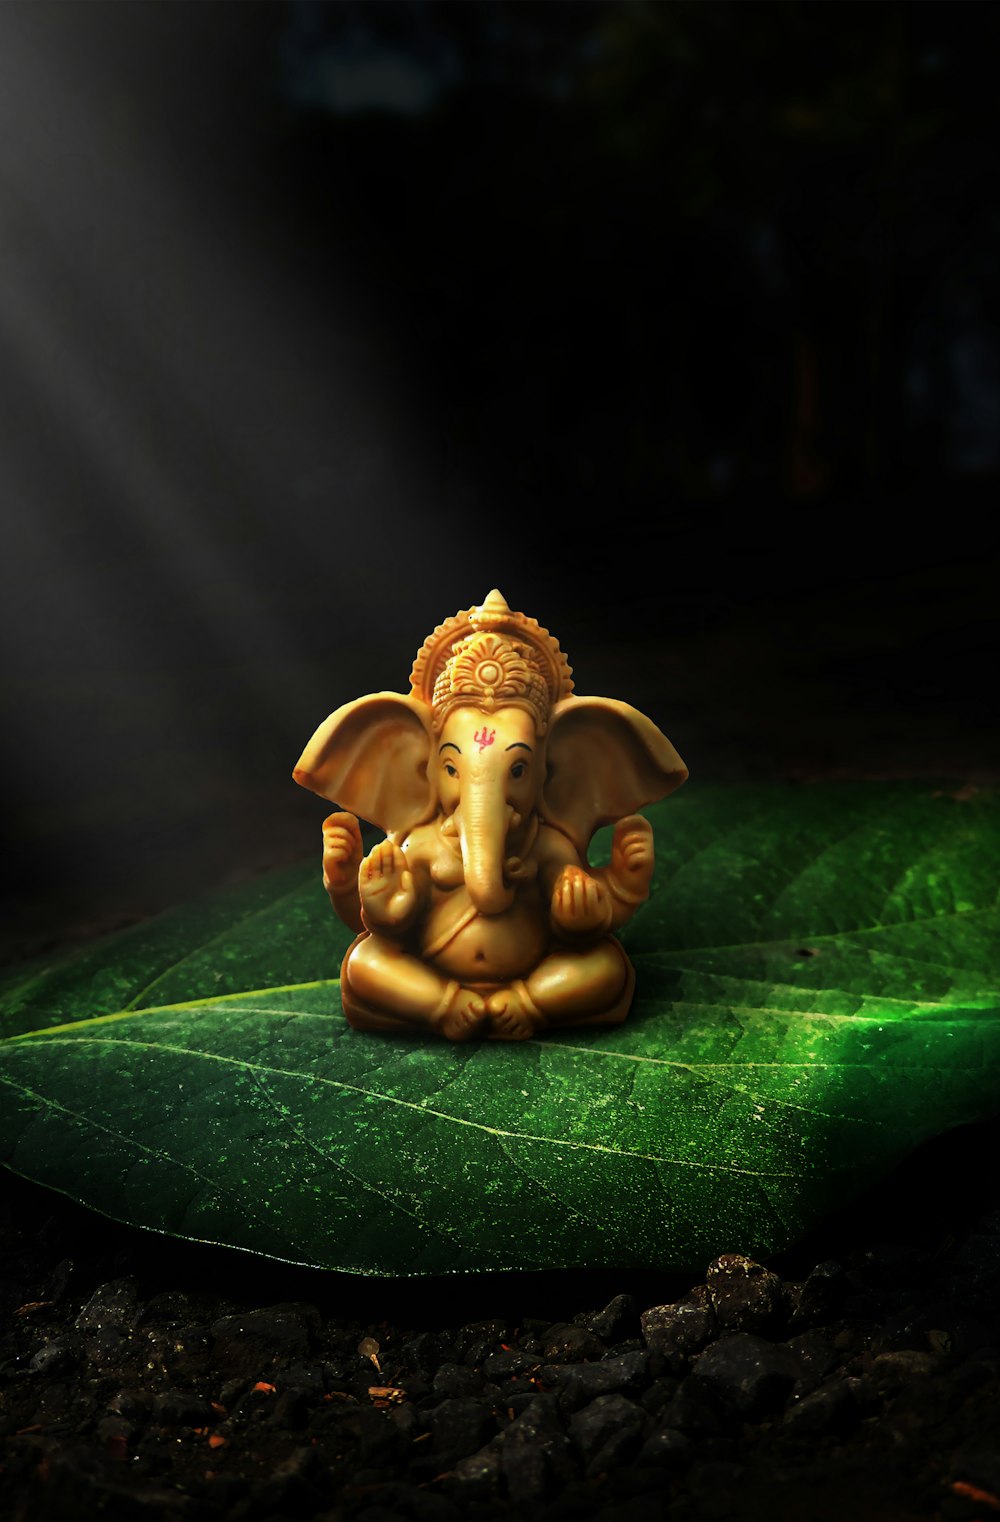 Gold dragon figurine on green leaf photo – Free Kolkata Image on ...